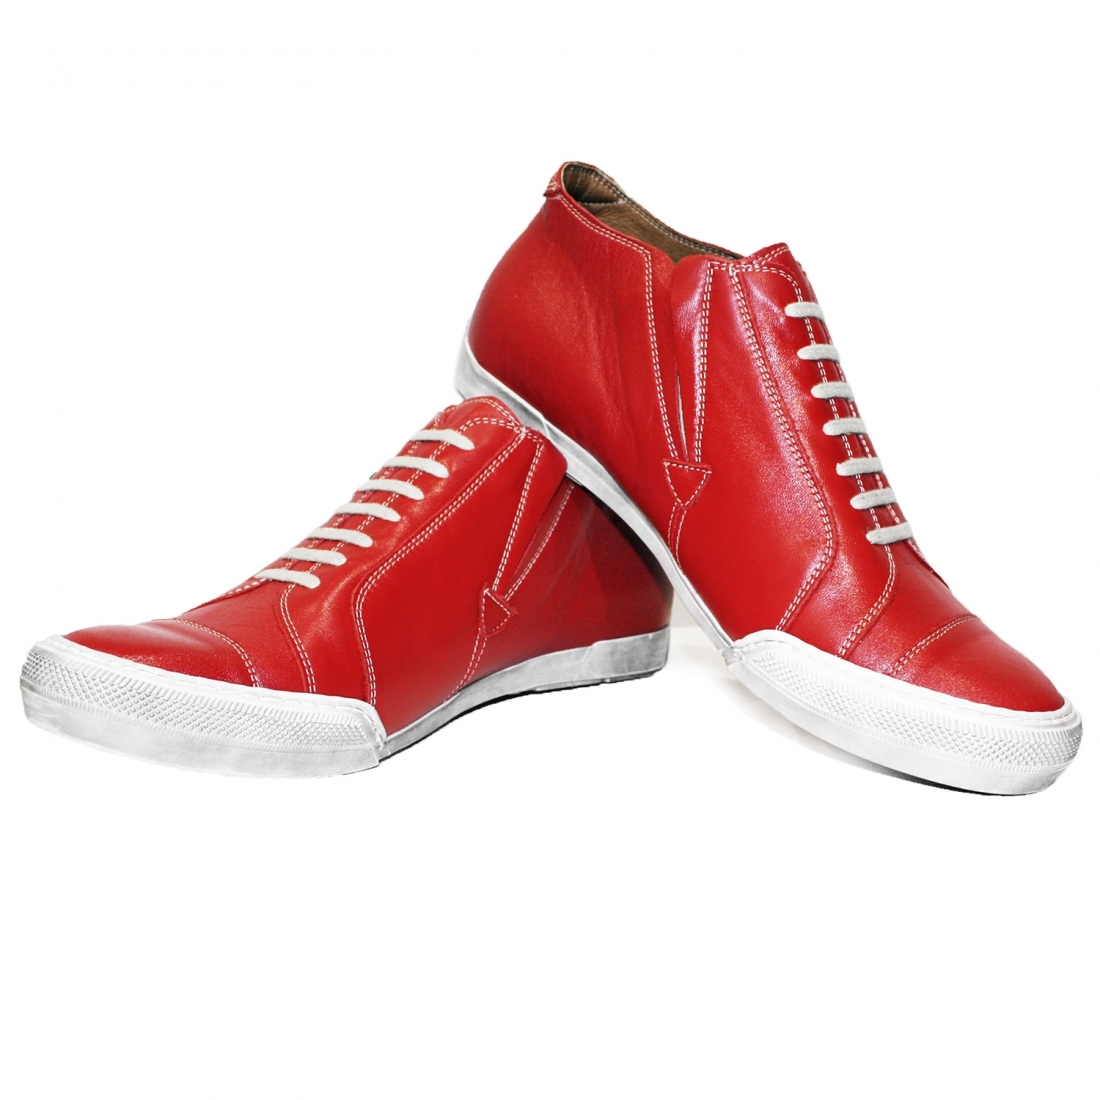 Modello Rednoise - Sneaker - Handmade Colorful Italian Leather Shoes